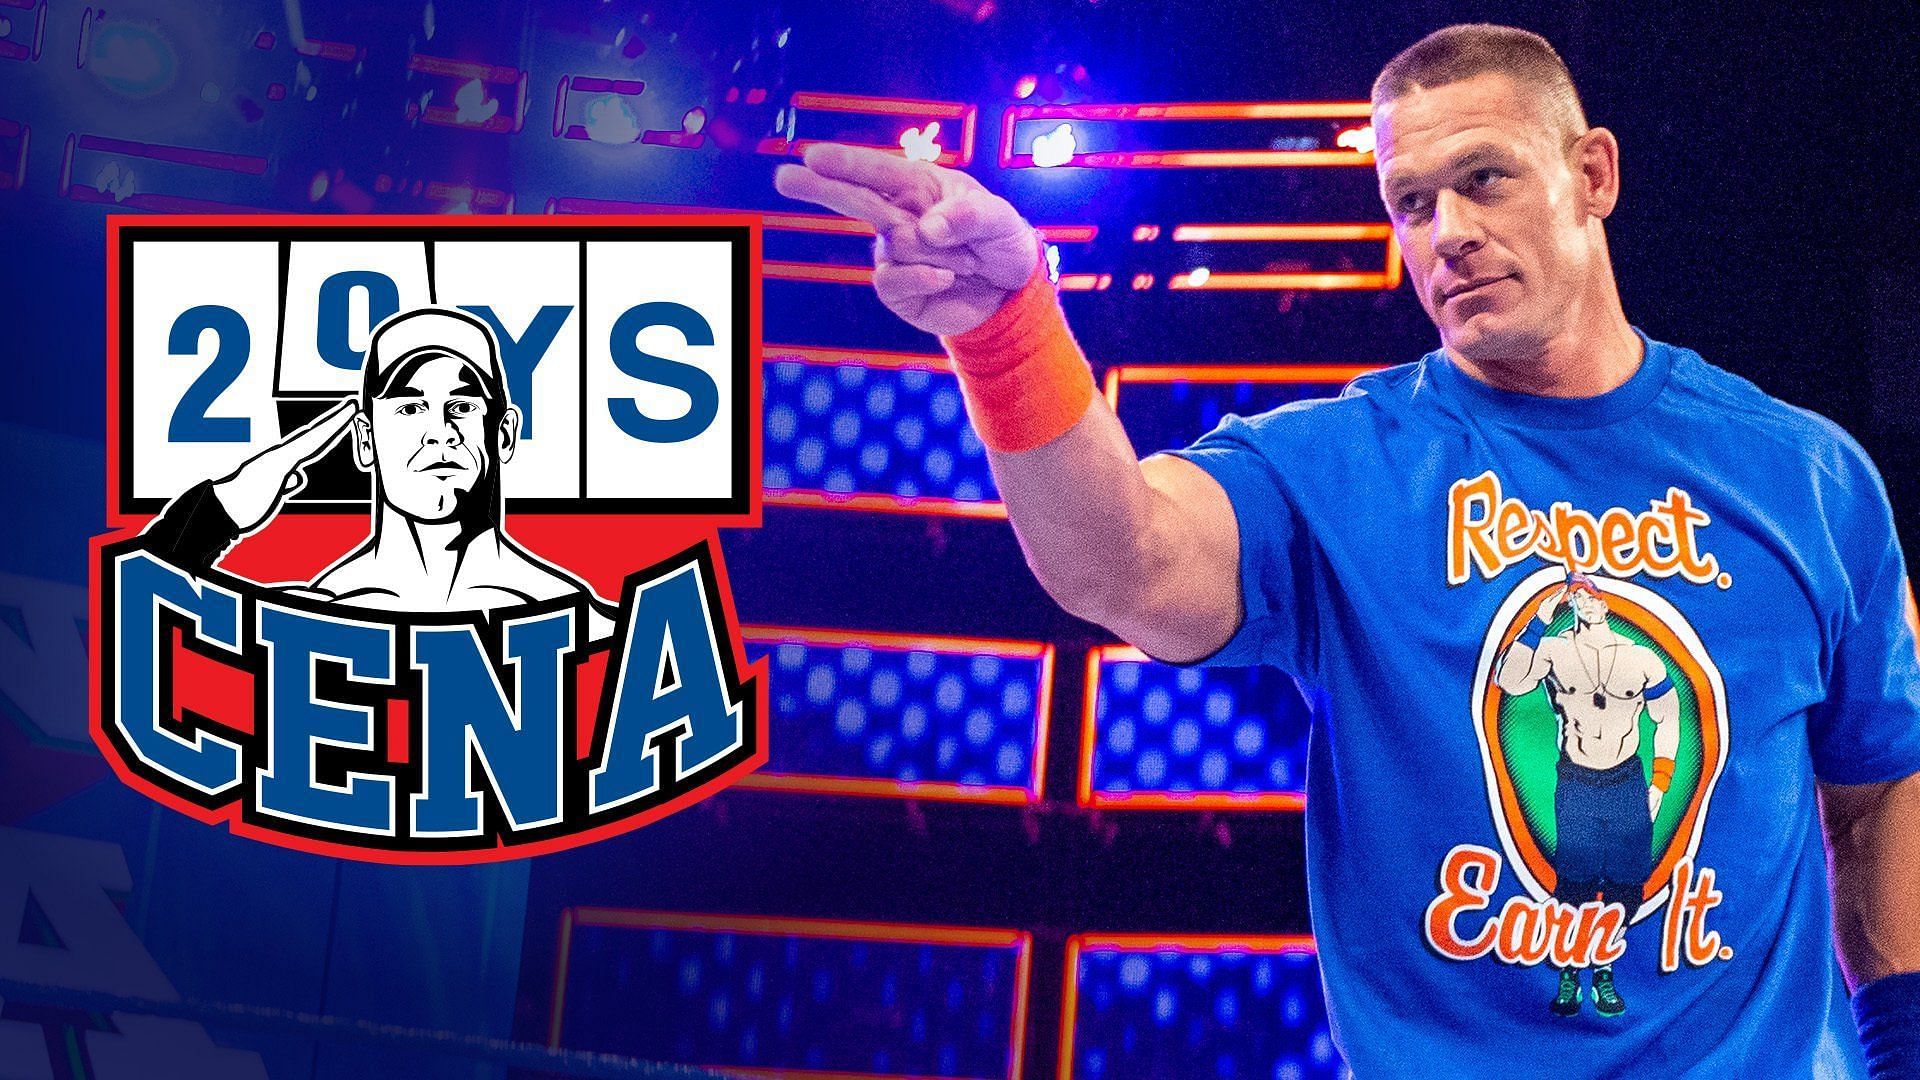 John Cena month has begun!